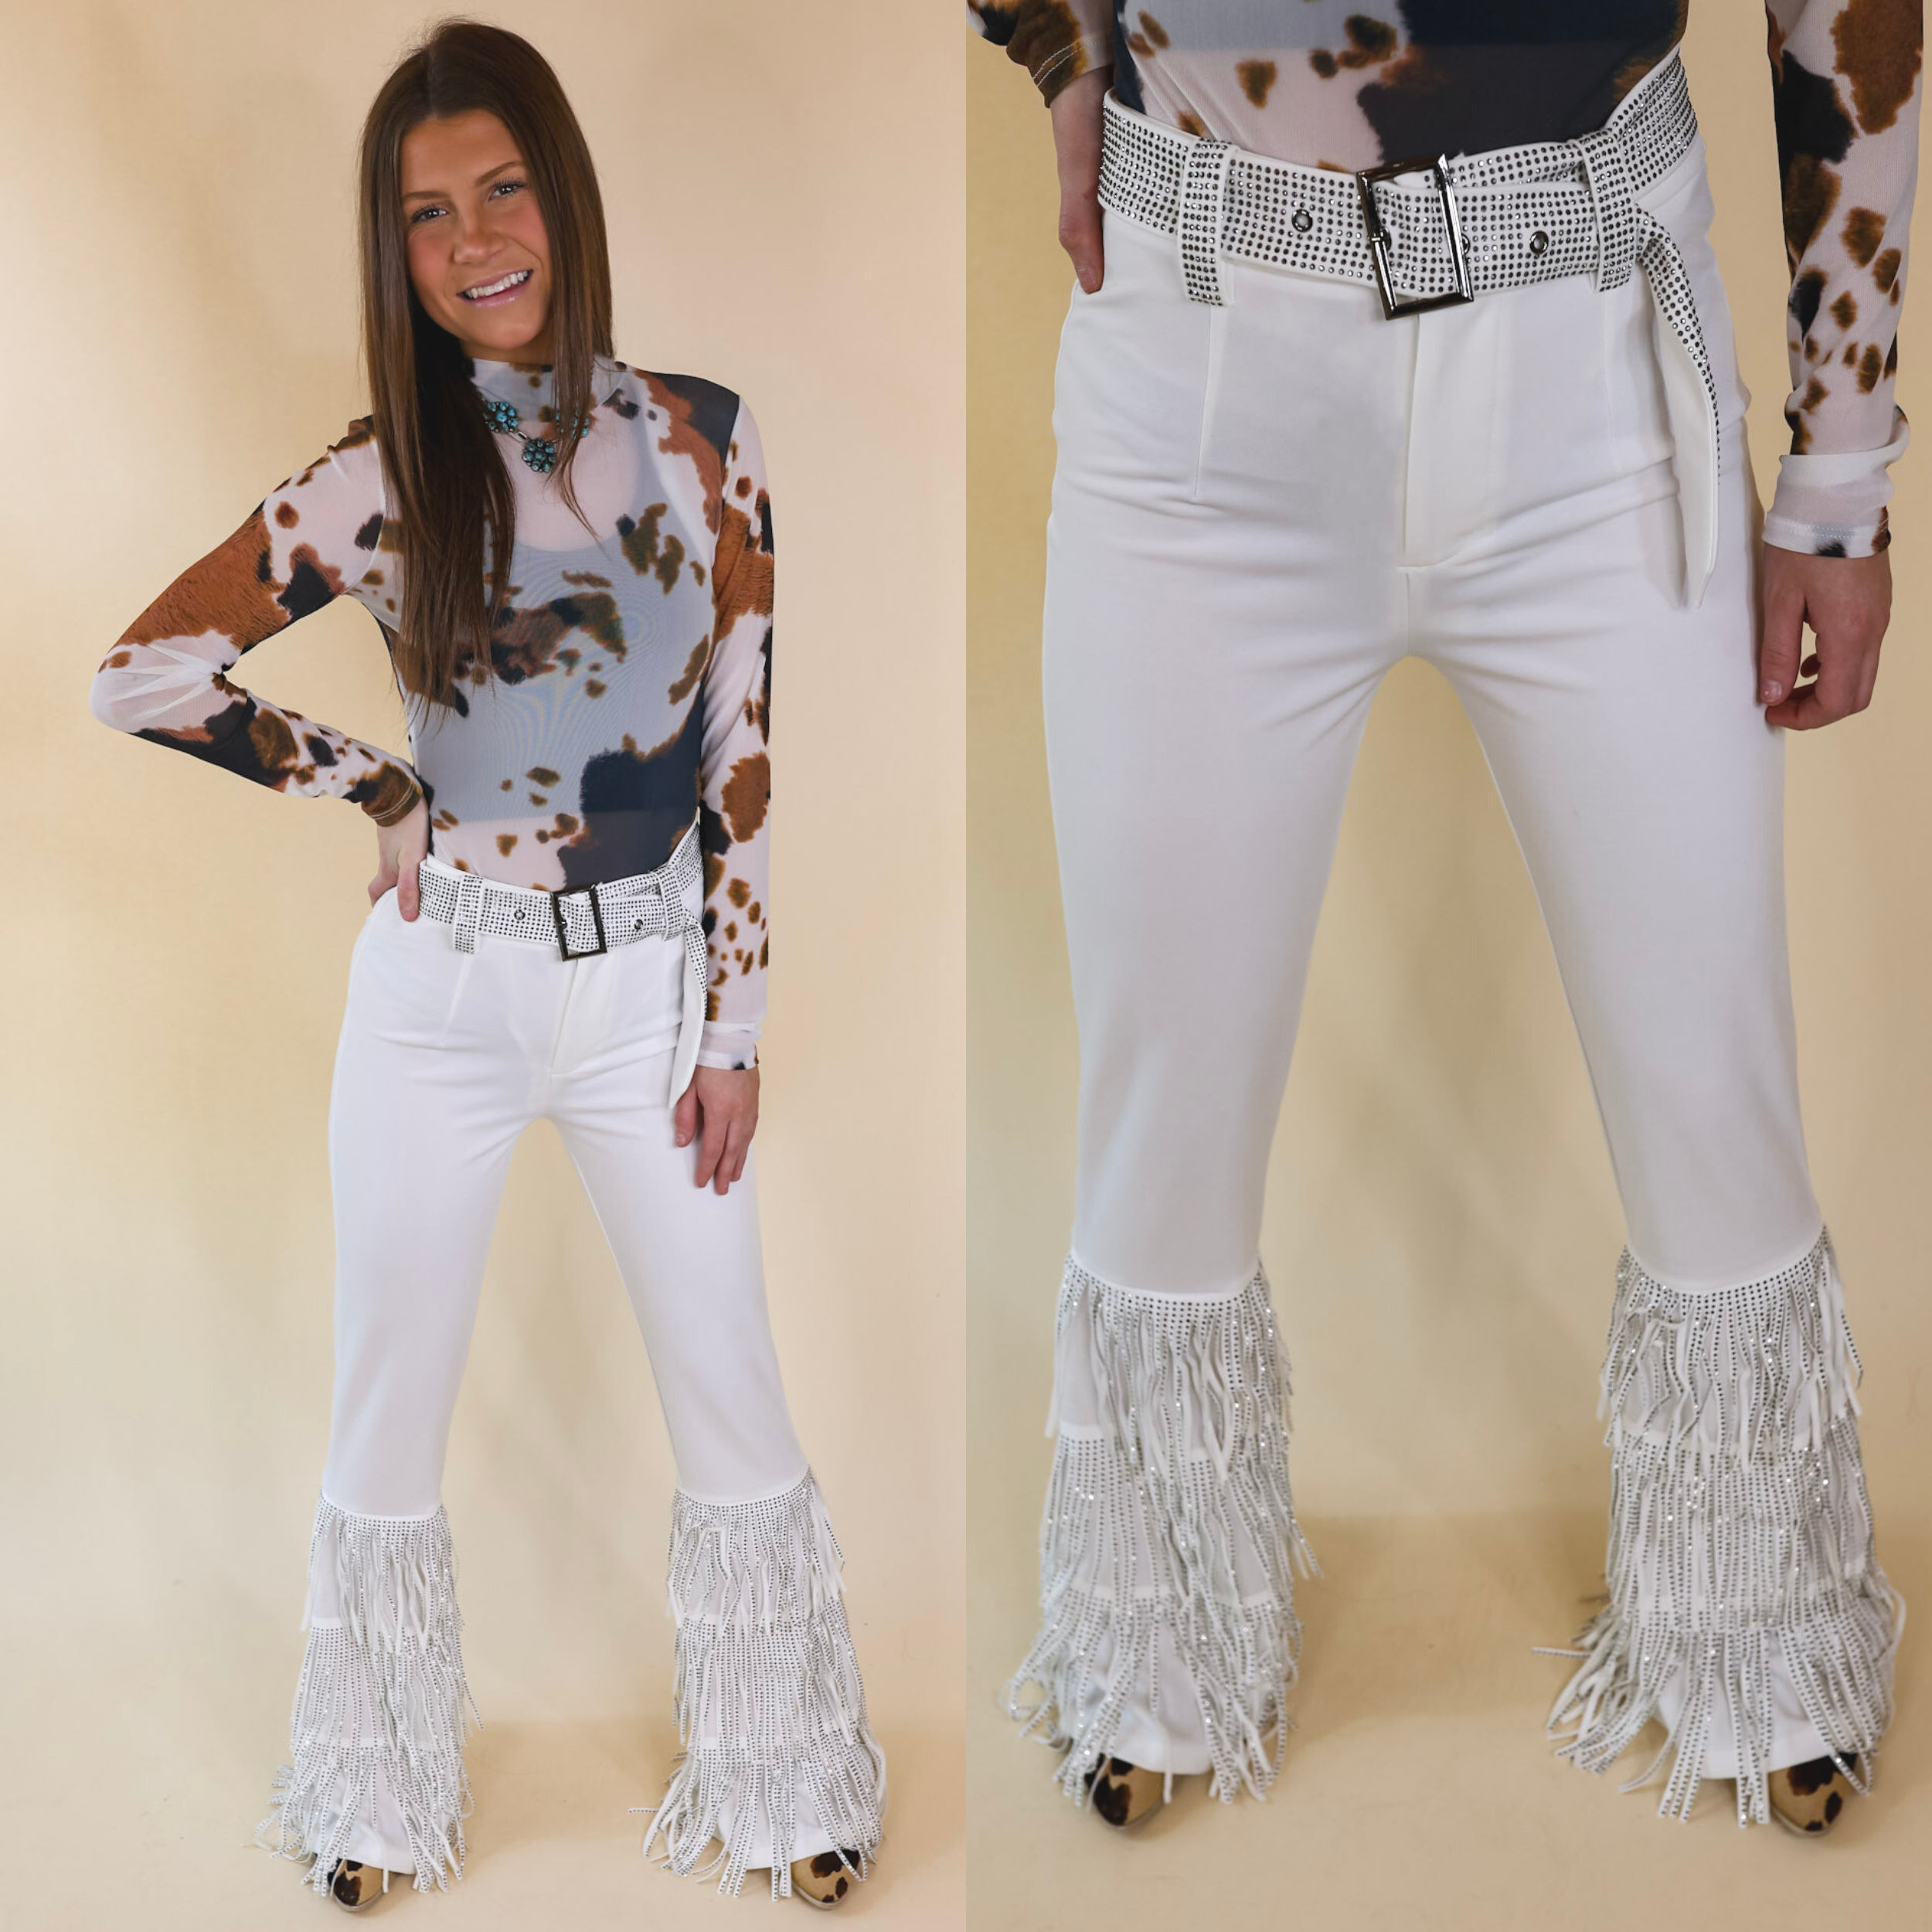 Cowboy Killer Crystal Fringe Bell Bottom Pants in White - Giddy Up Glamour Boutique